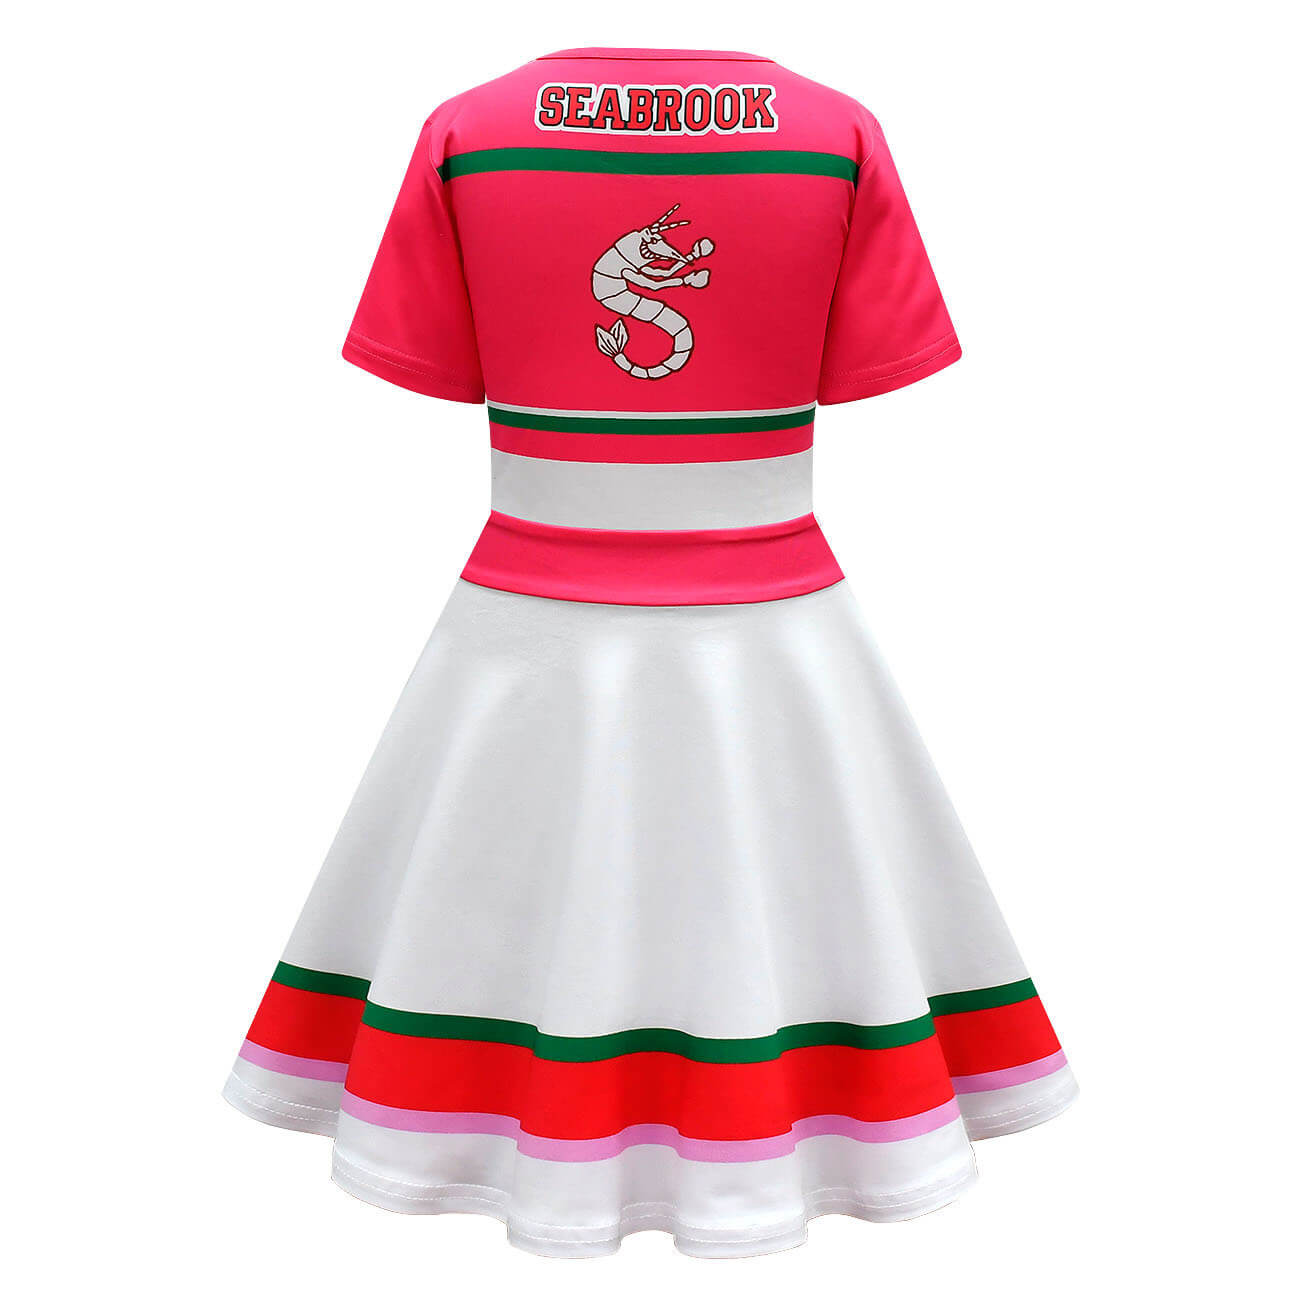 Addison Cosplay Dress Girls Cheerleader Costume